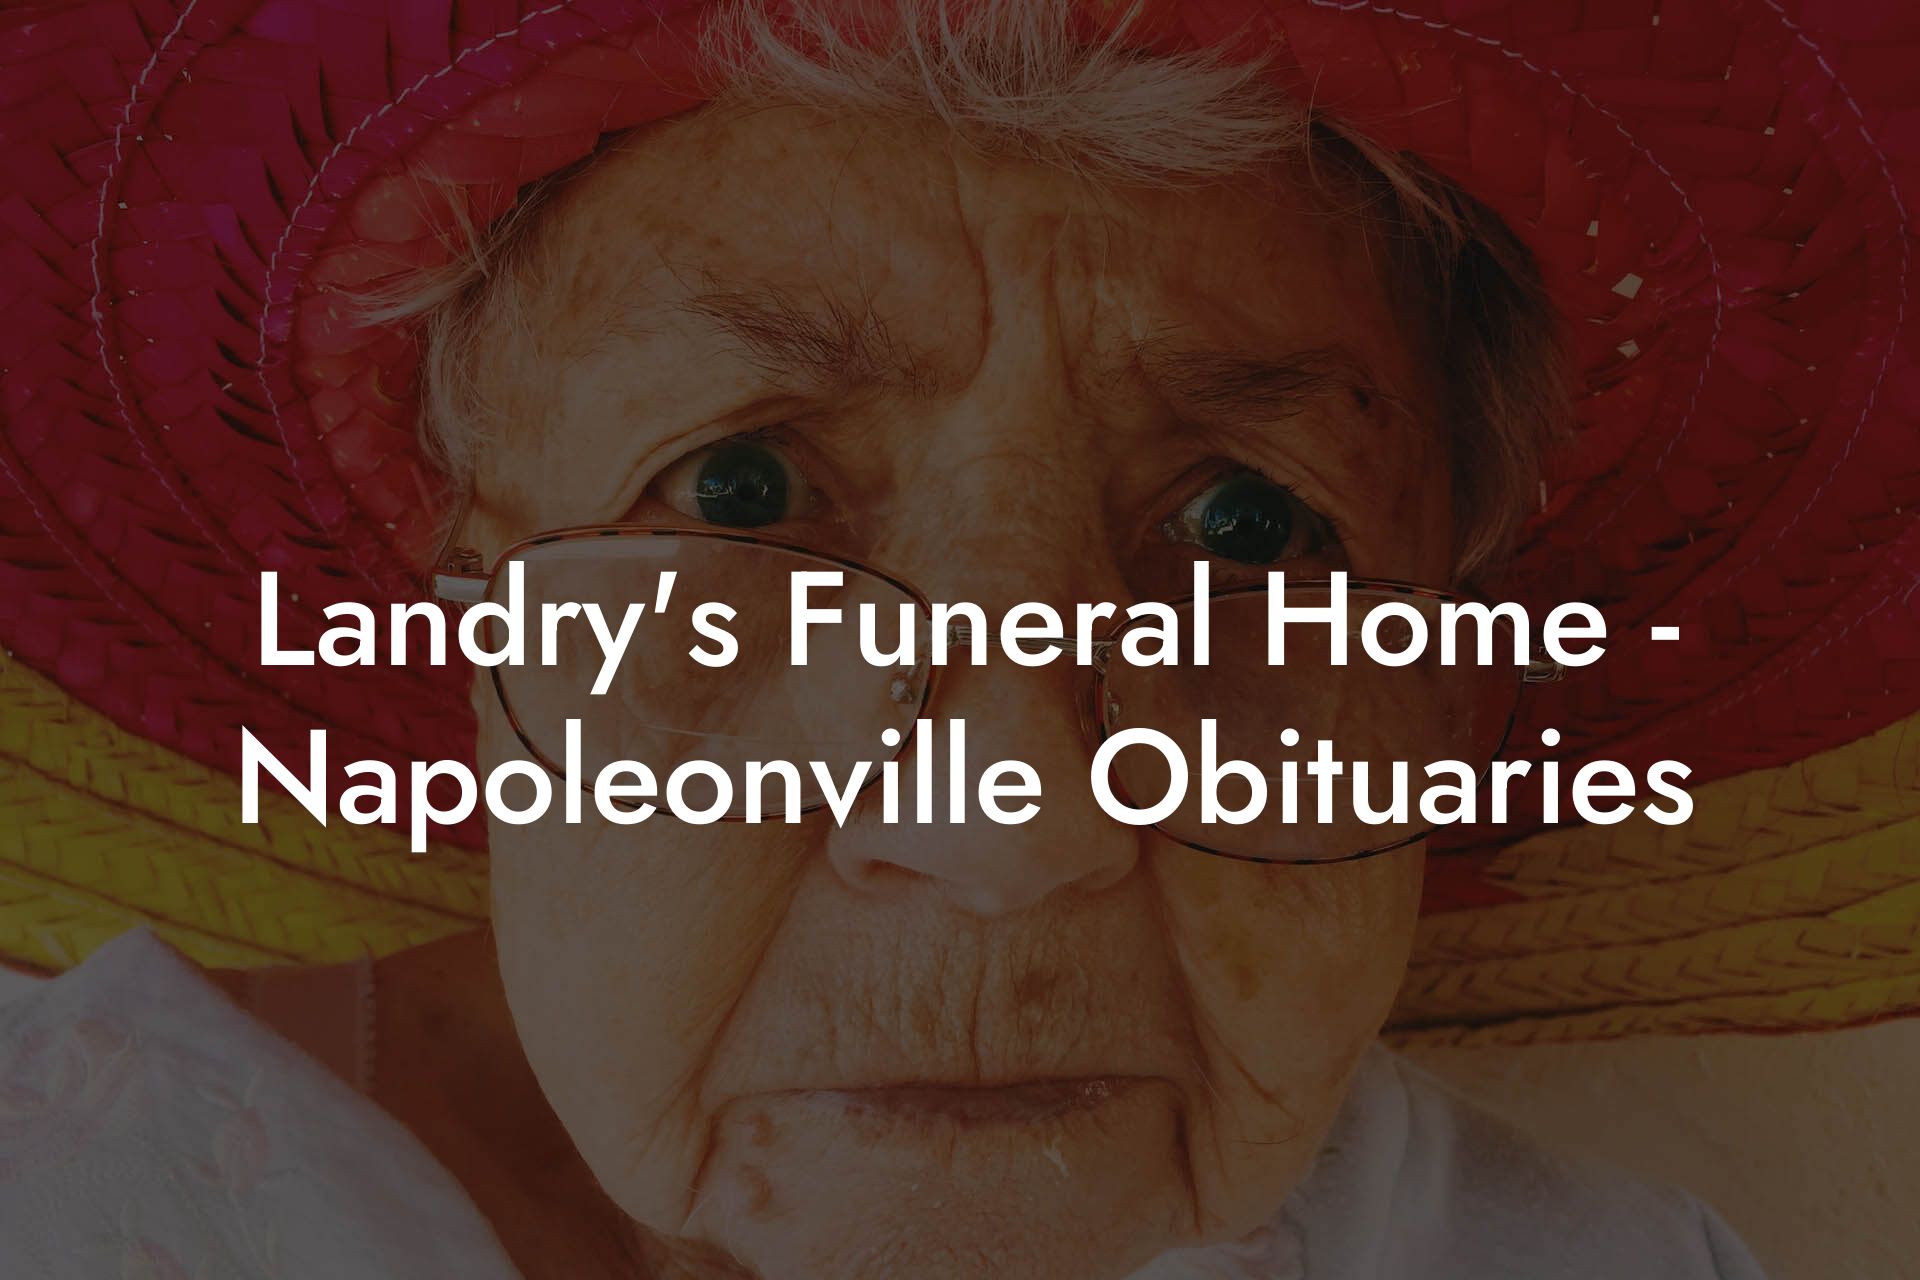 Landry's Funeral Home - Napoleonville Obituaries